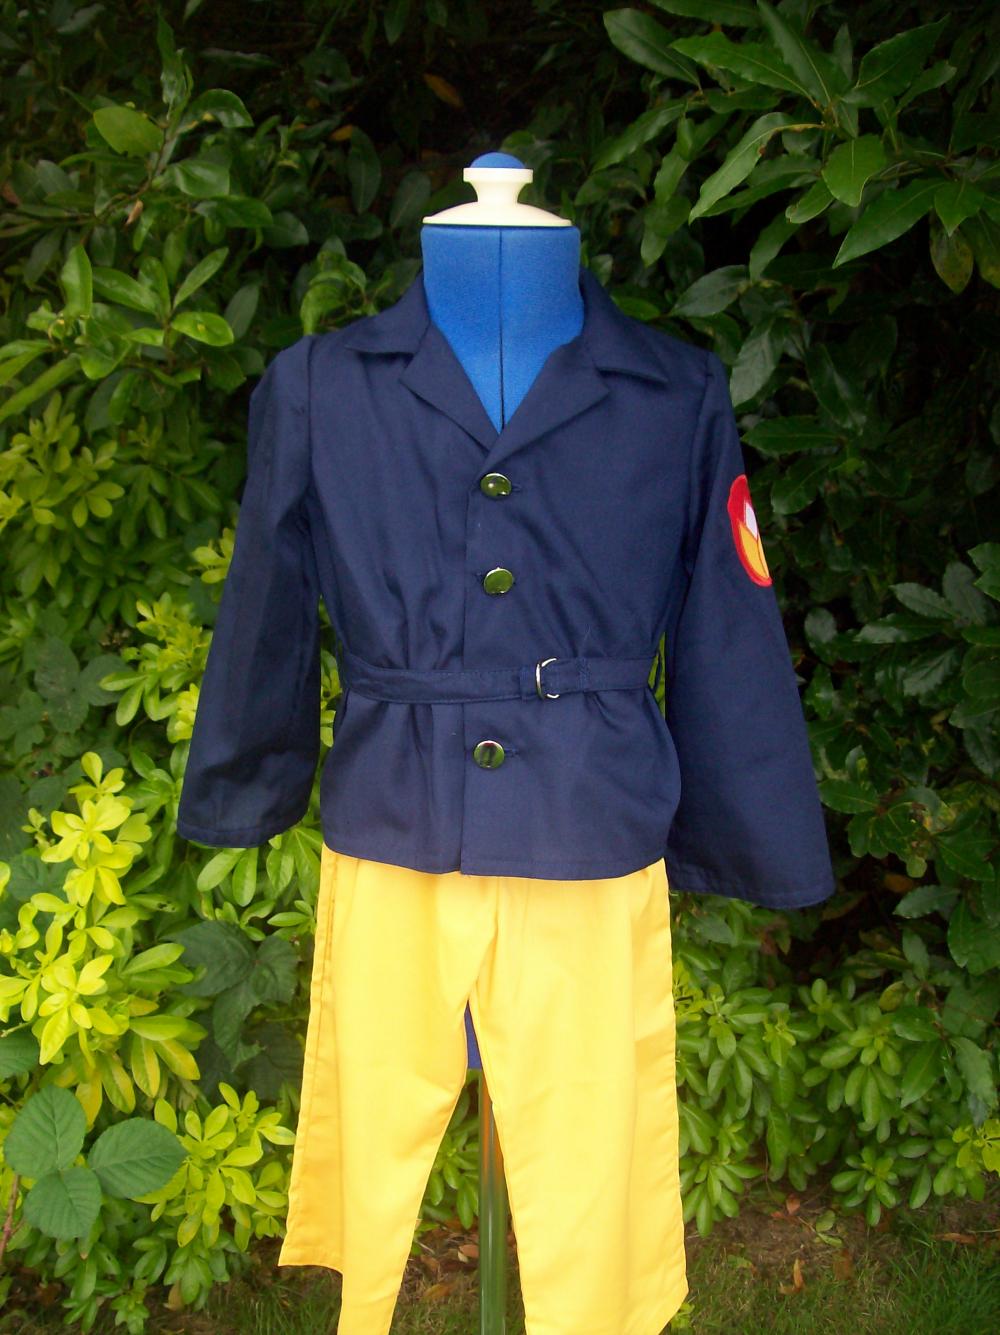 Unisex Child's Fireman Fancy Dress Costume/outfit